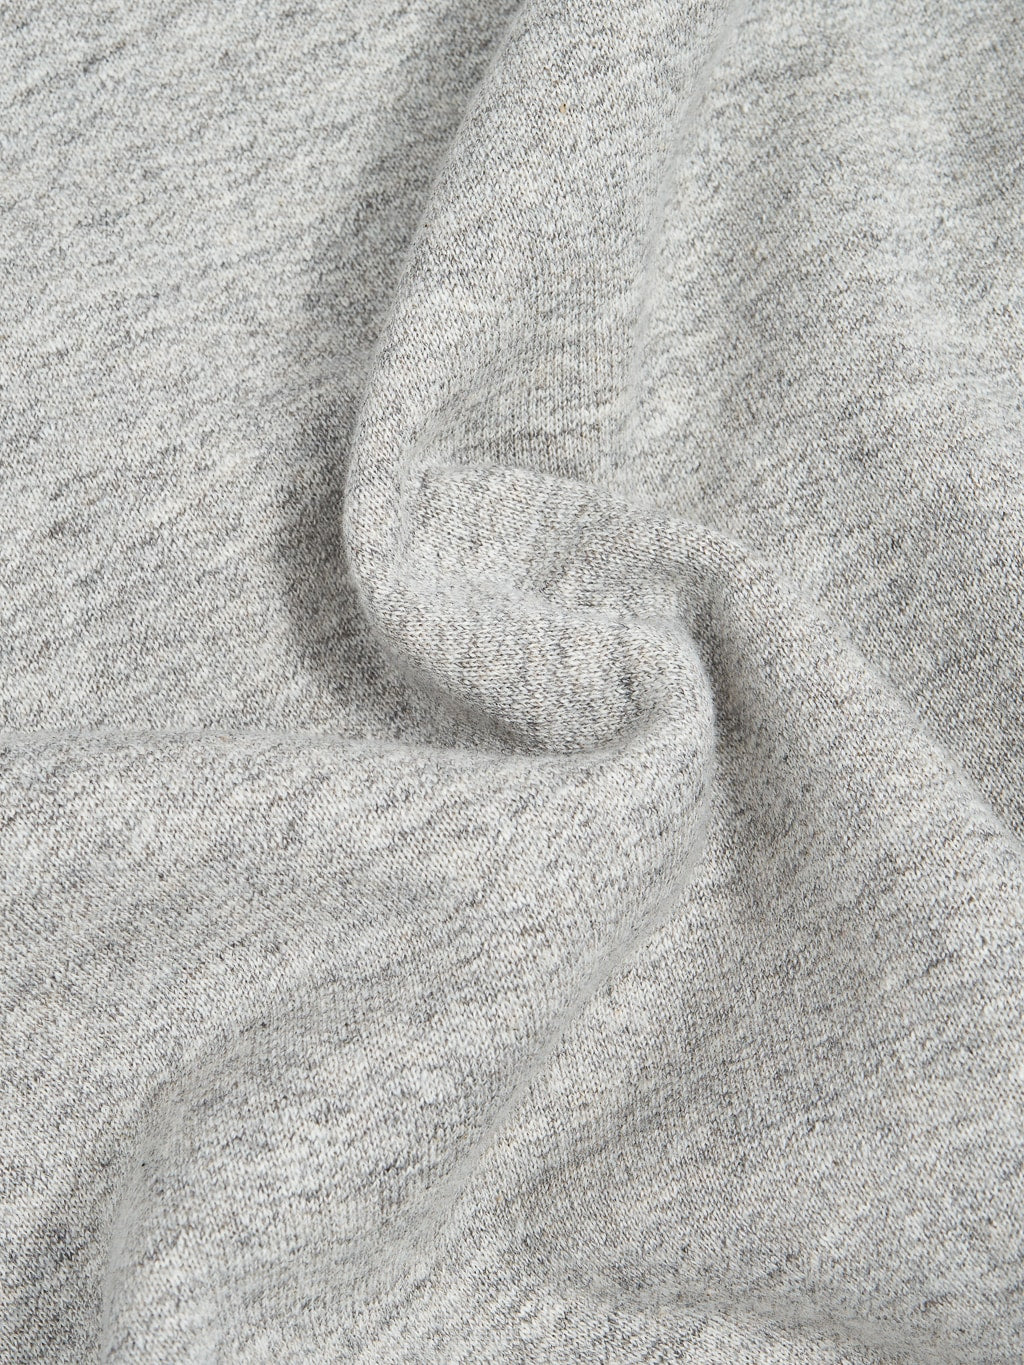 Wonder Looper Pullover Hoodie Fleeced Foxfibre grey cotton fabric texture